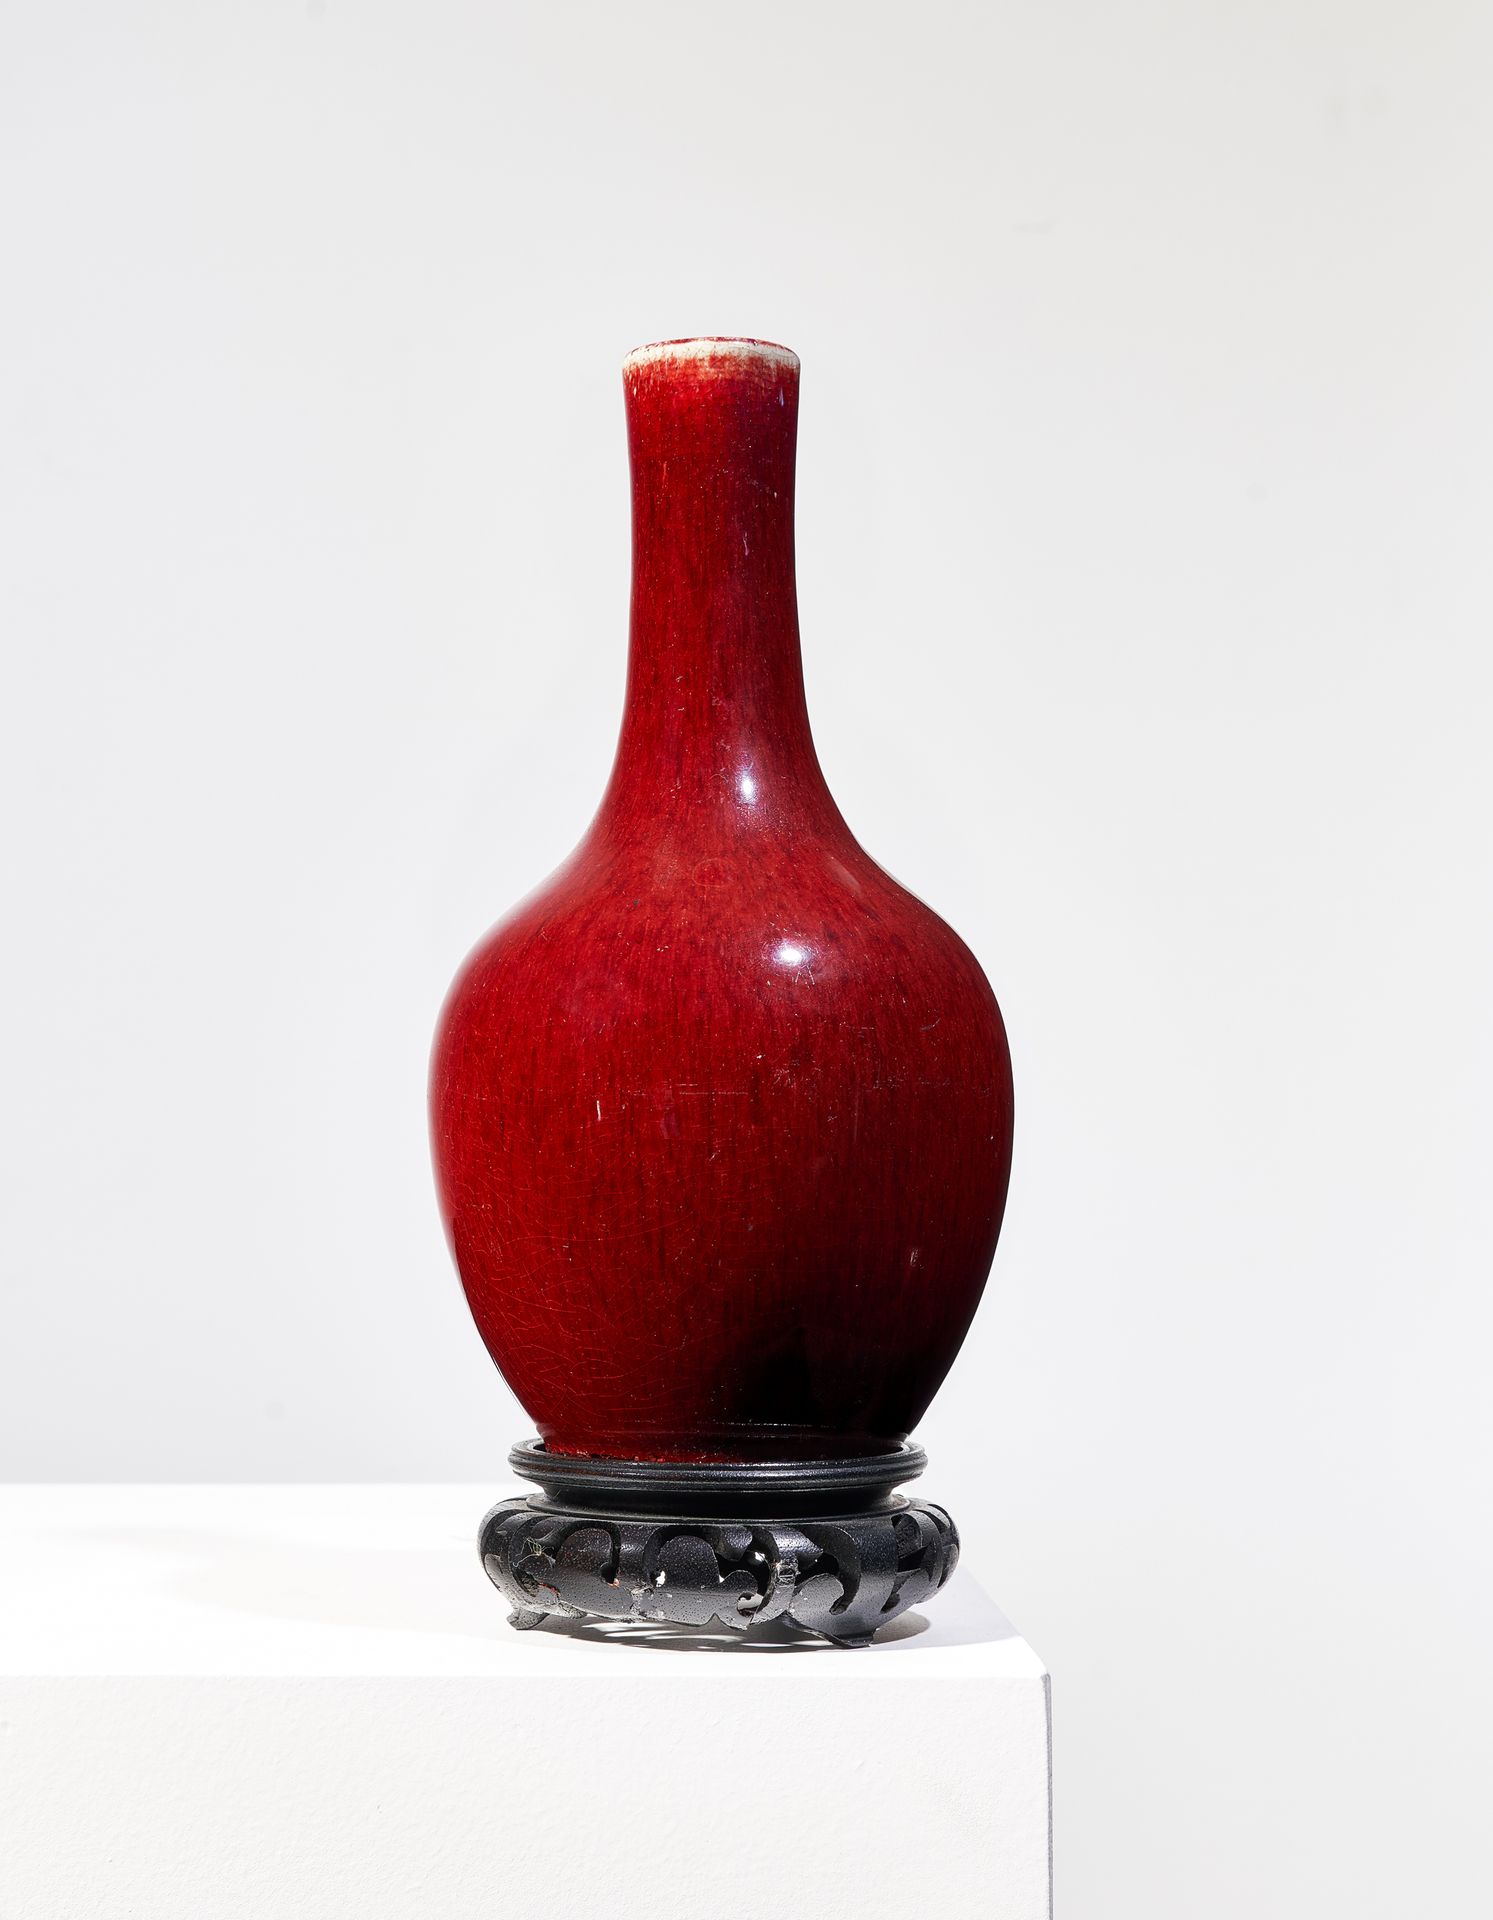 Null 兰亭集势瓶

晚清时期(1644-1911)

深红色，釉面有裂纹，底的流釉有凿痕。

连同木架

高：22厘米

出处：第83和84号拍品。

- &hellip;